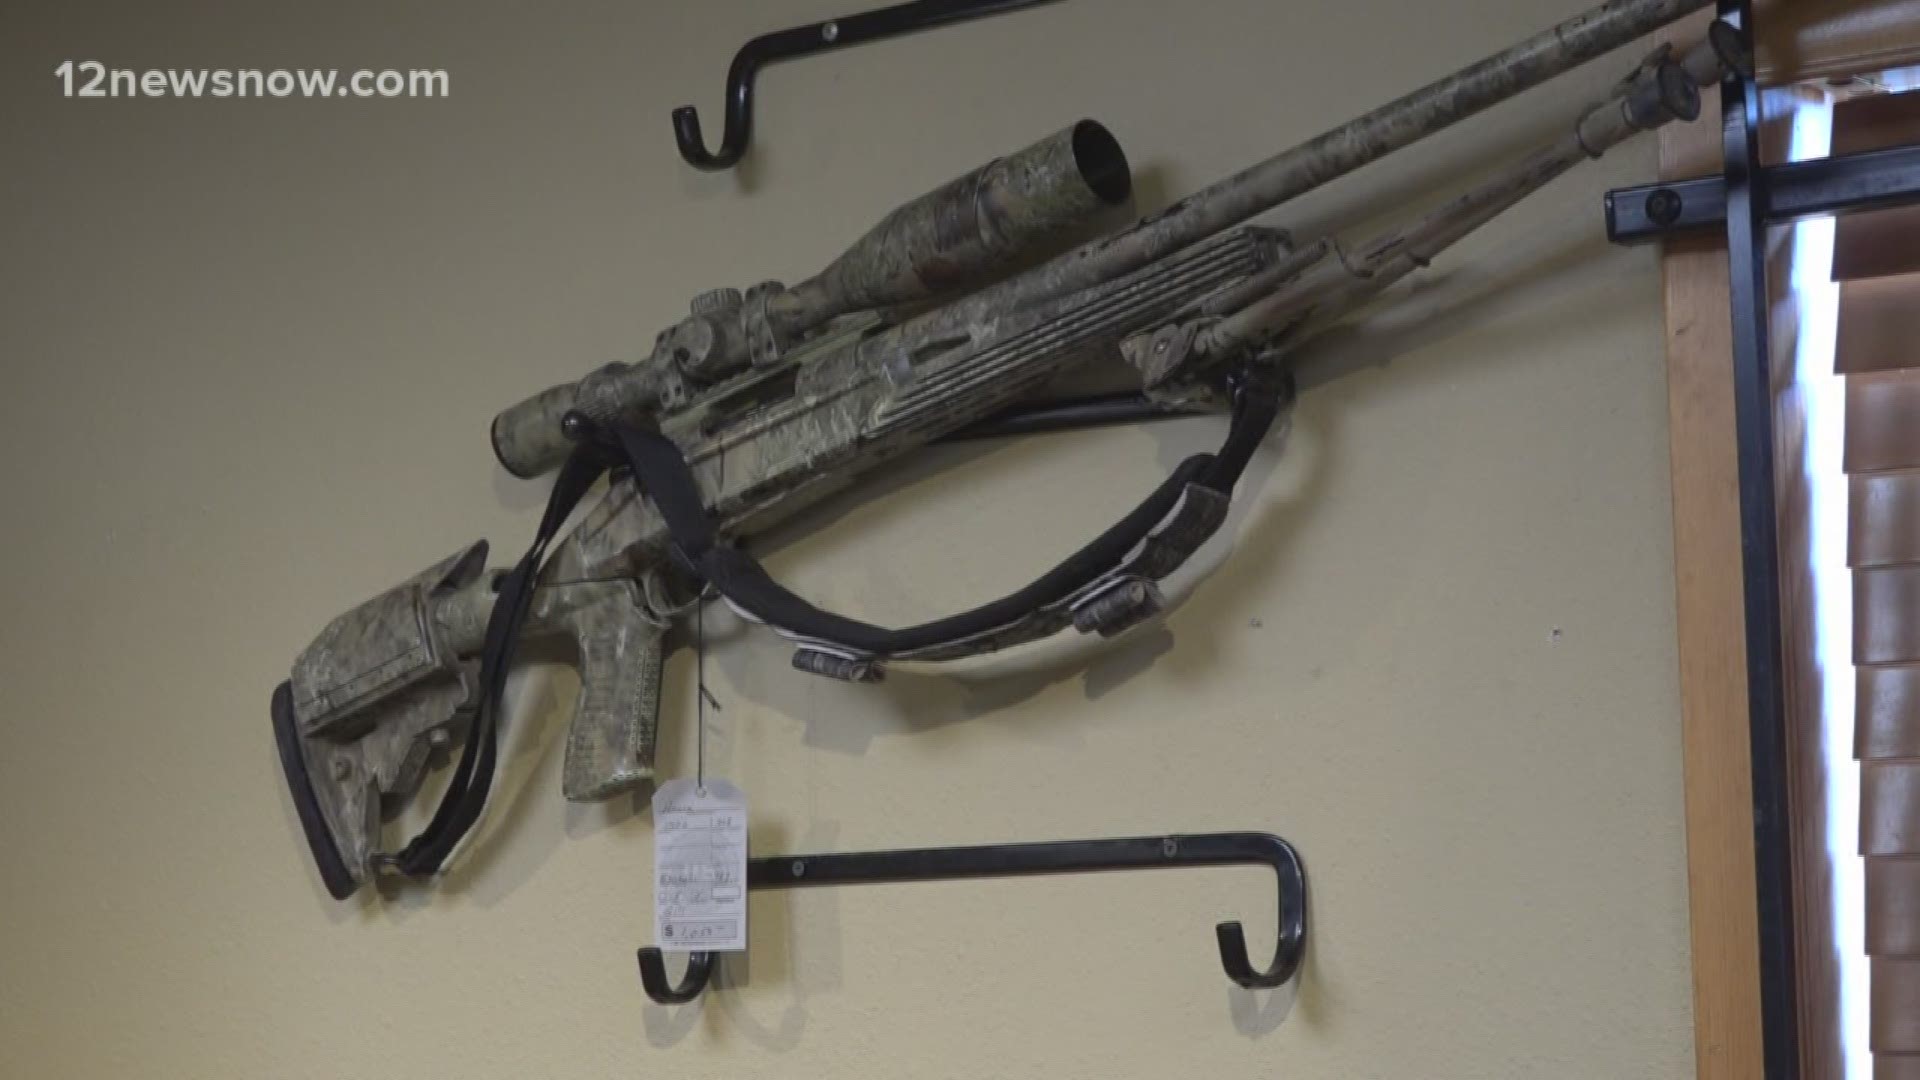 Silsbee gun shops wants to open gun range